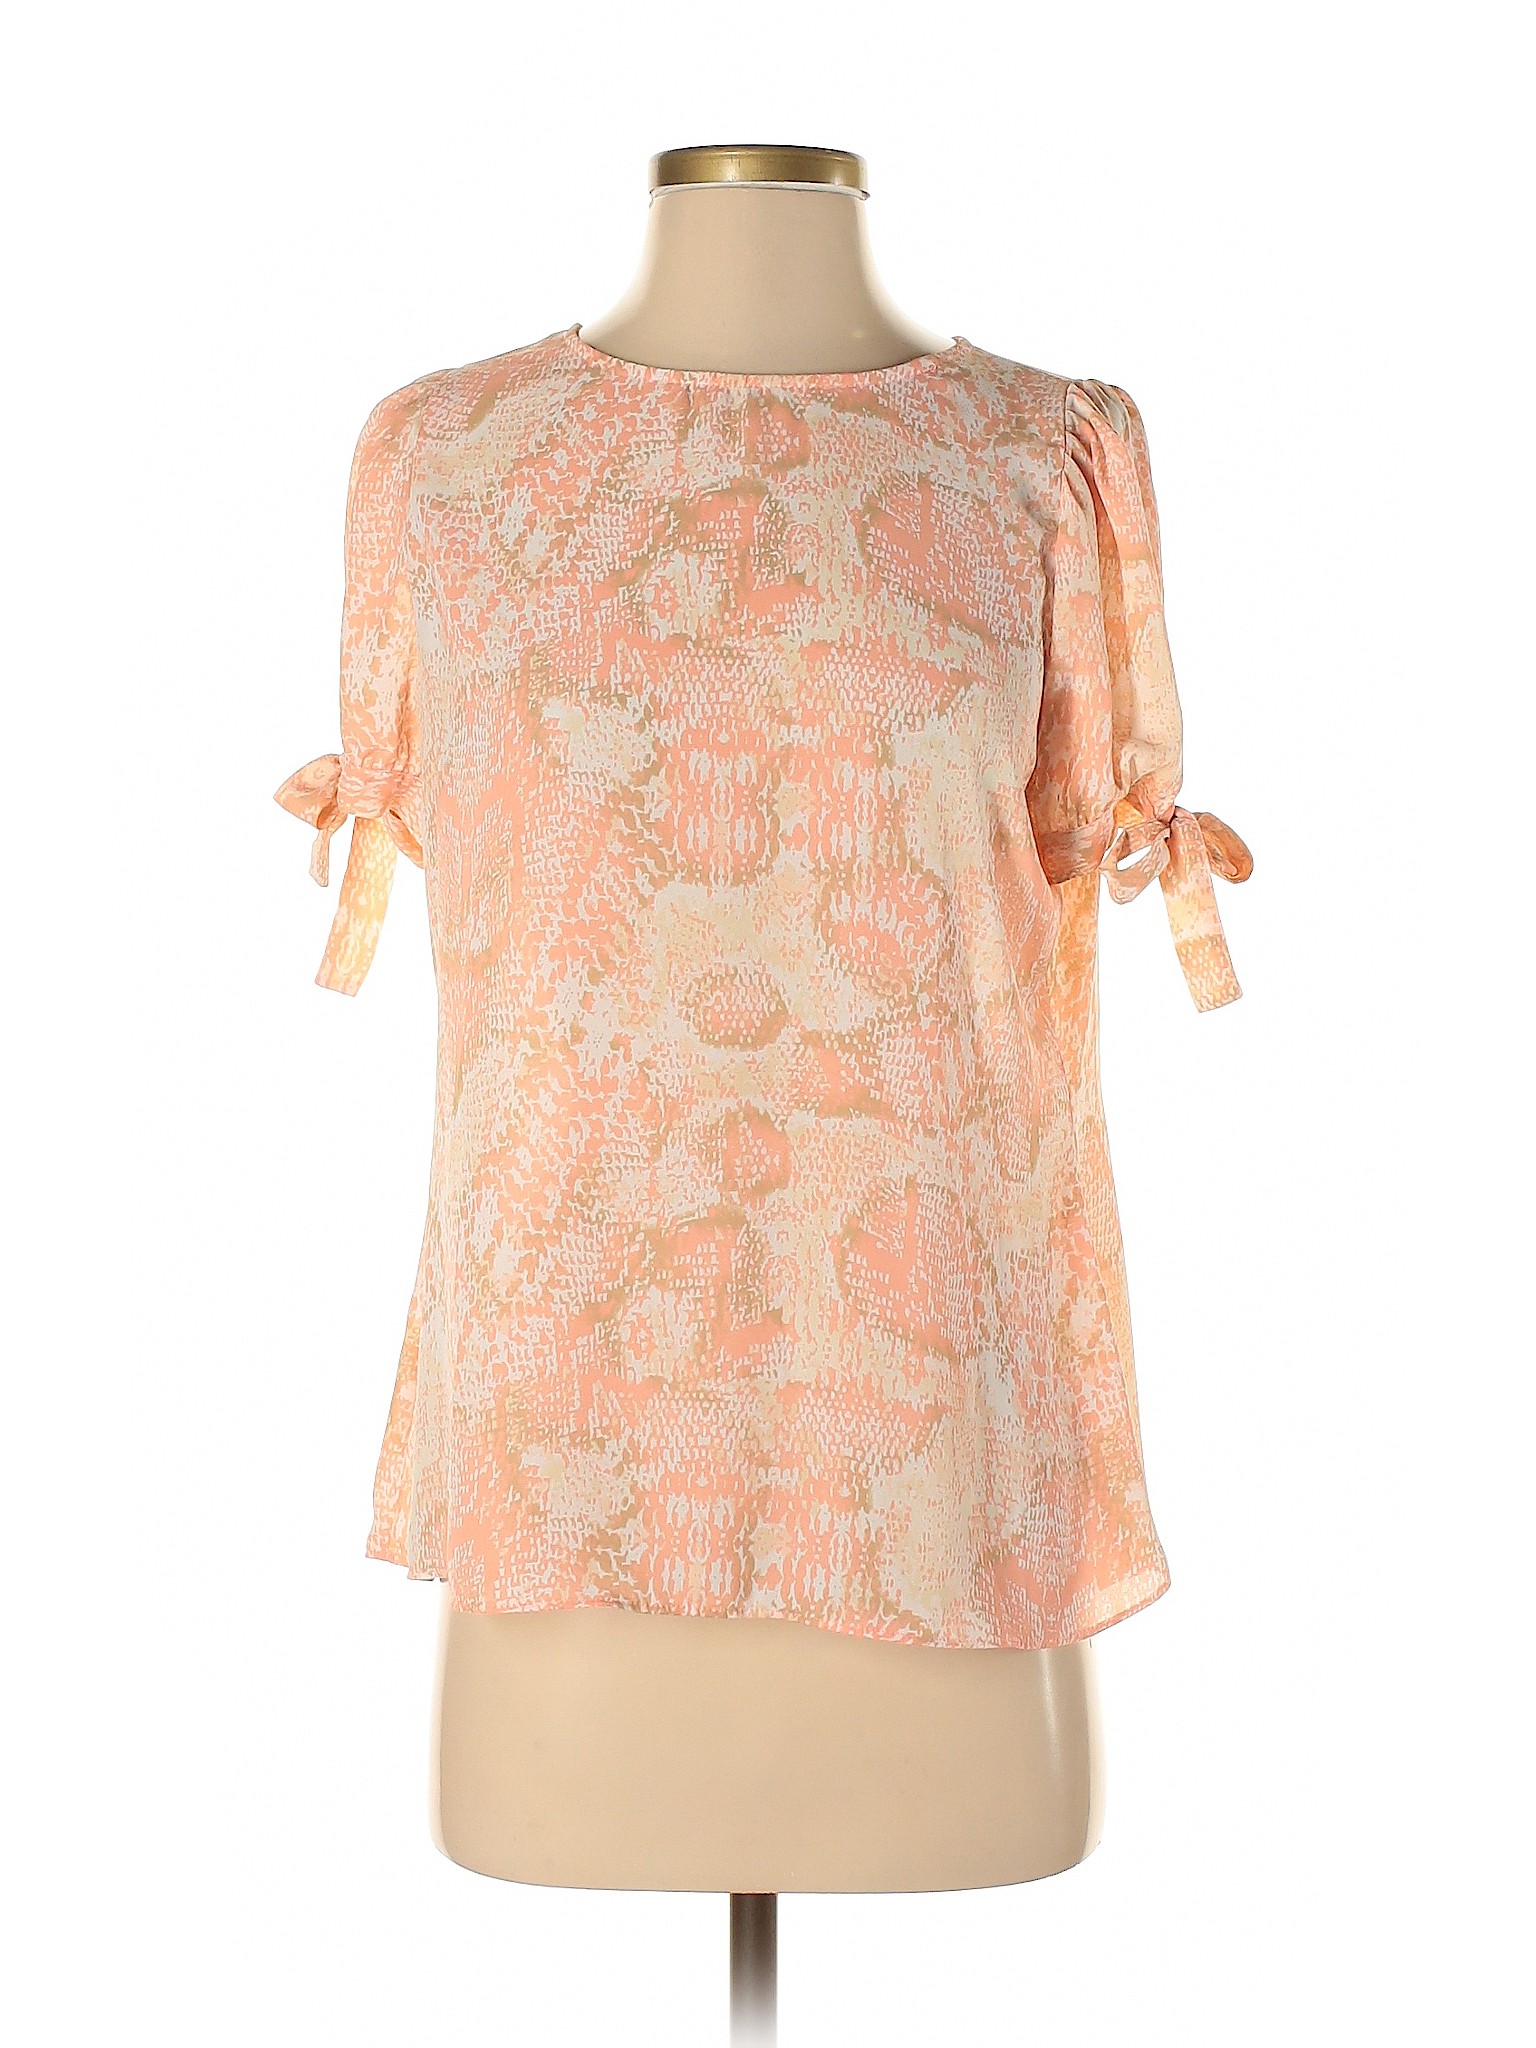 Worthington Women Pink Short Sleeve Blouse S | eBay